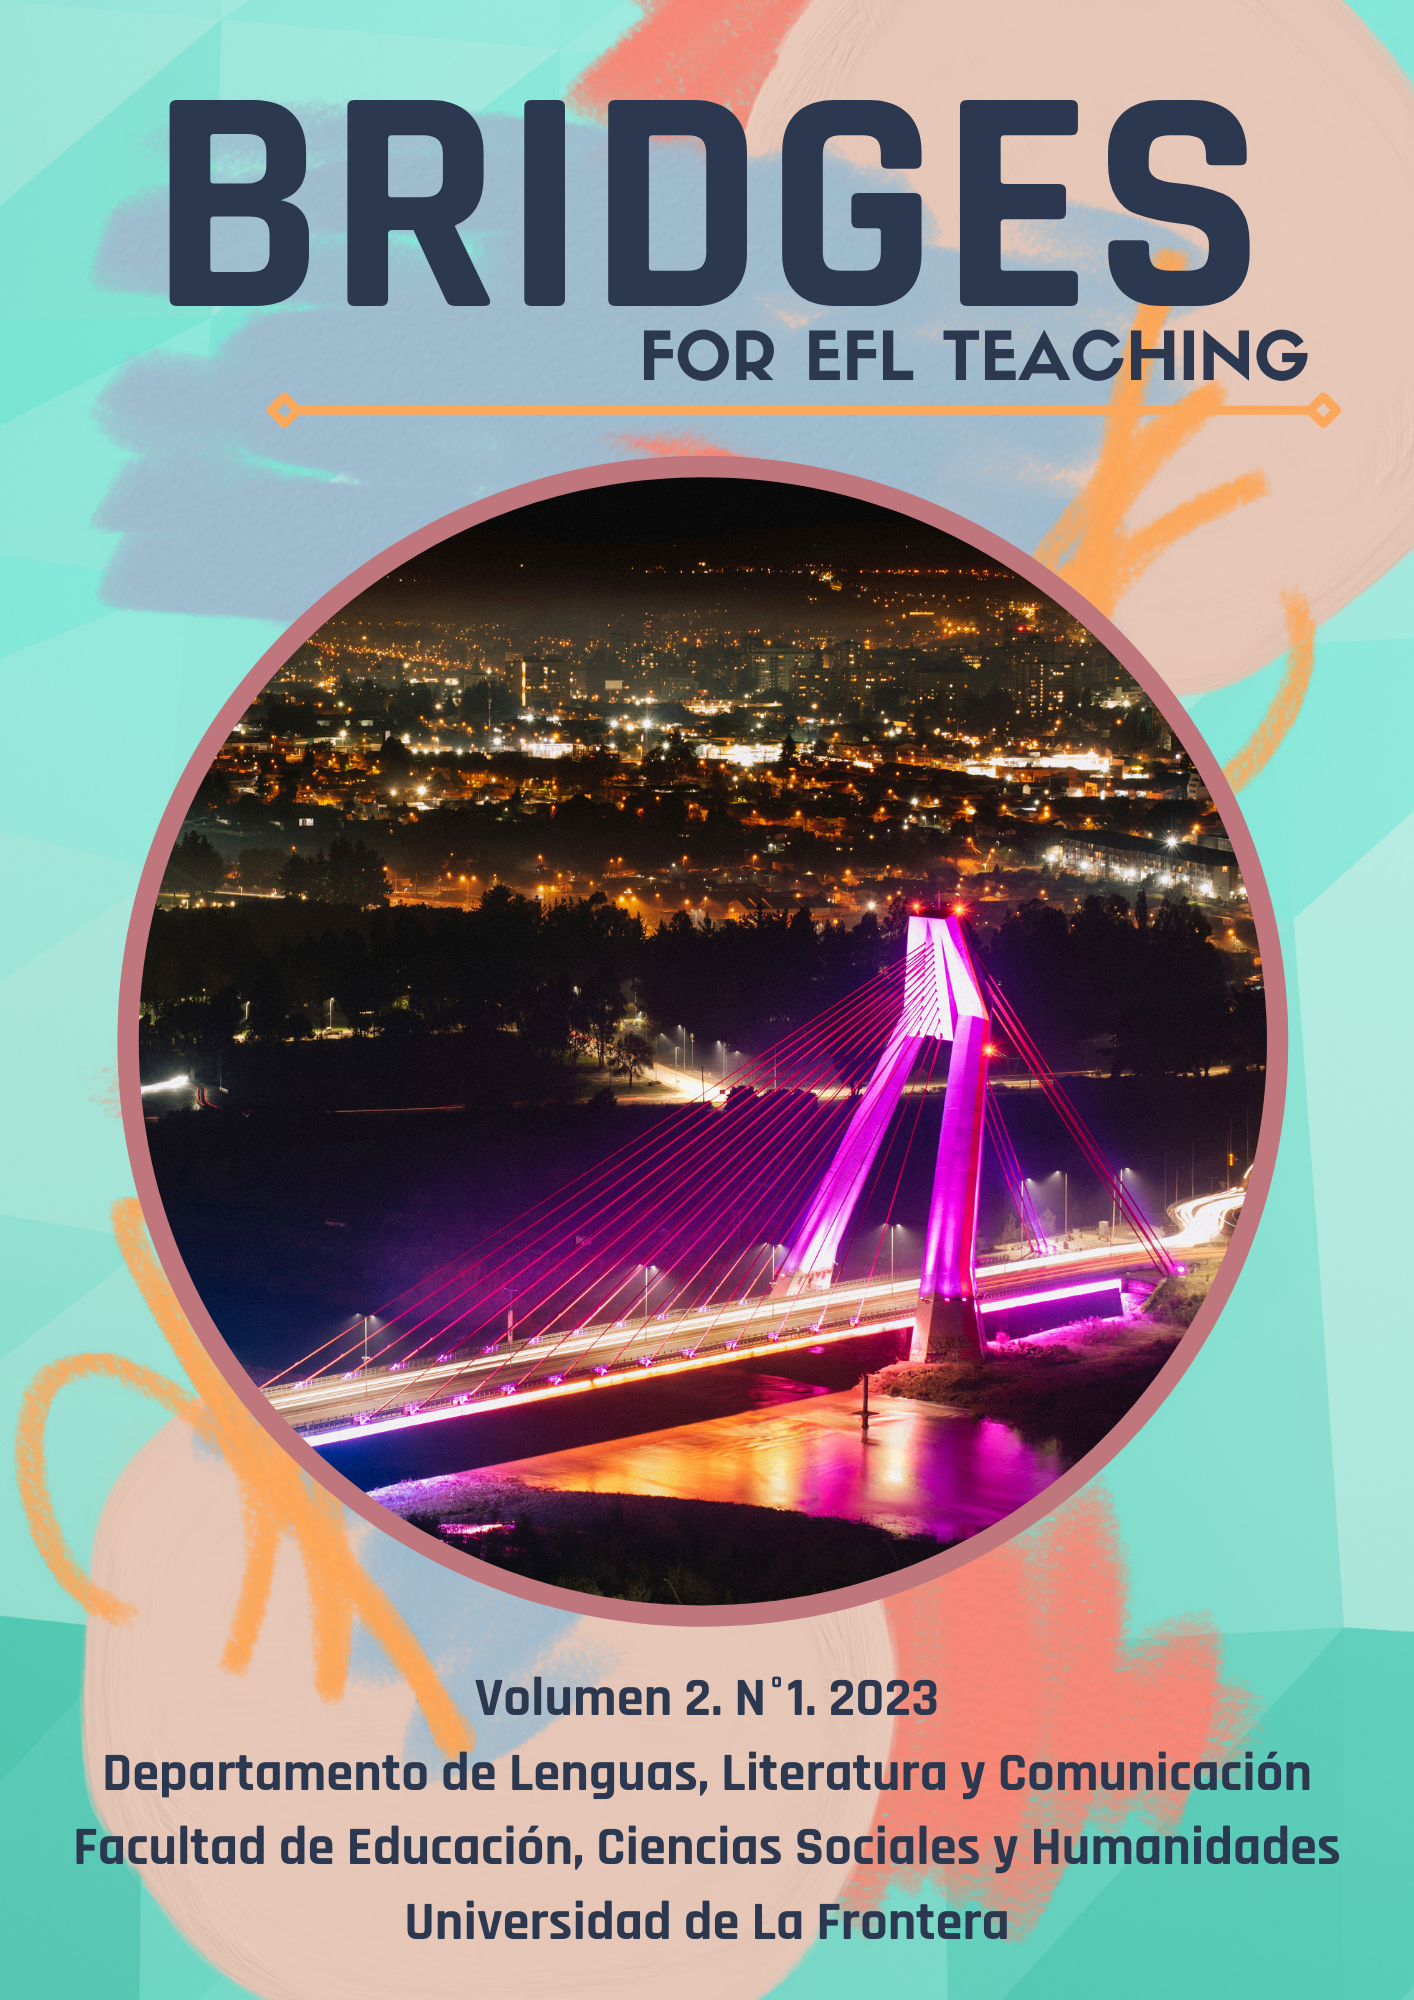 Vol.1 N°1 (2022): Bridges for EFL Teaching